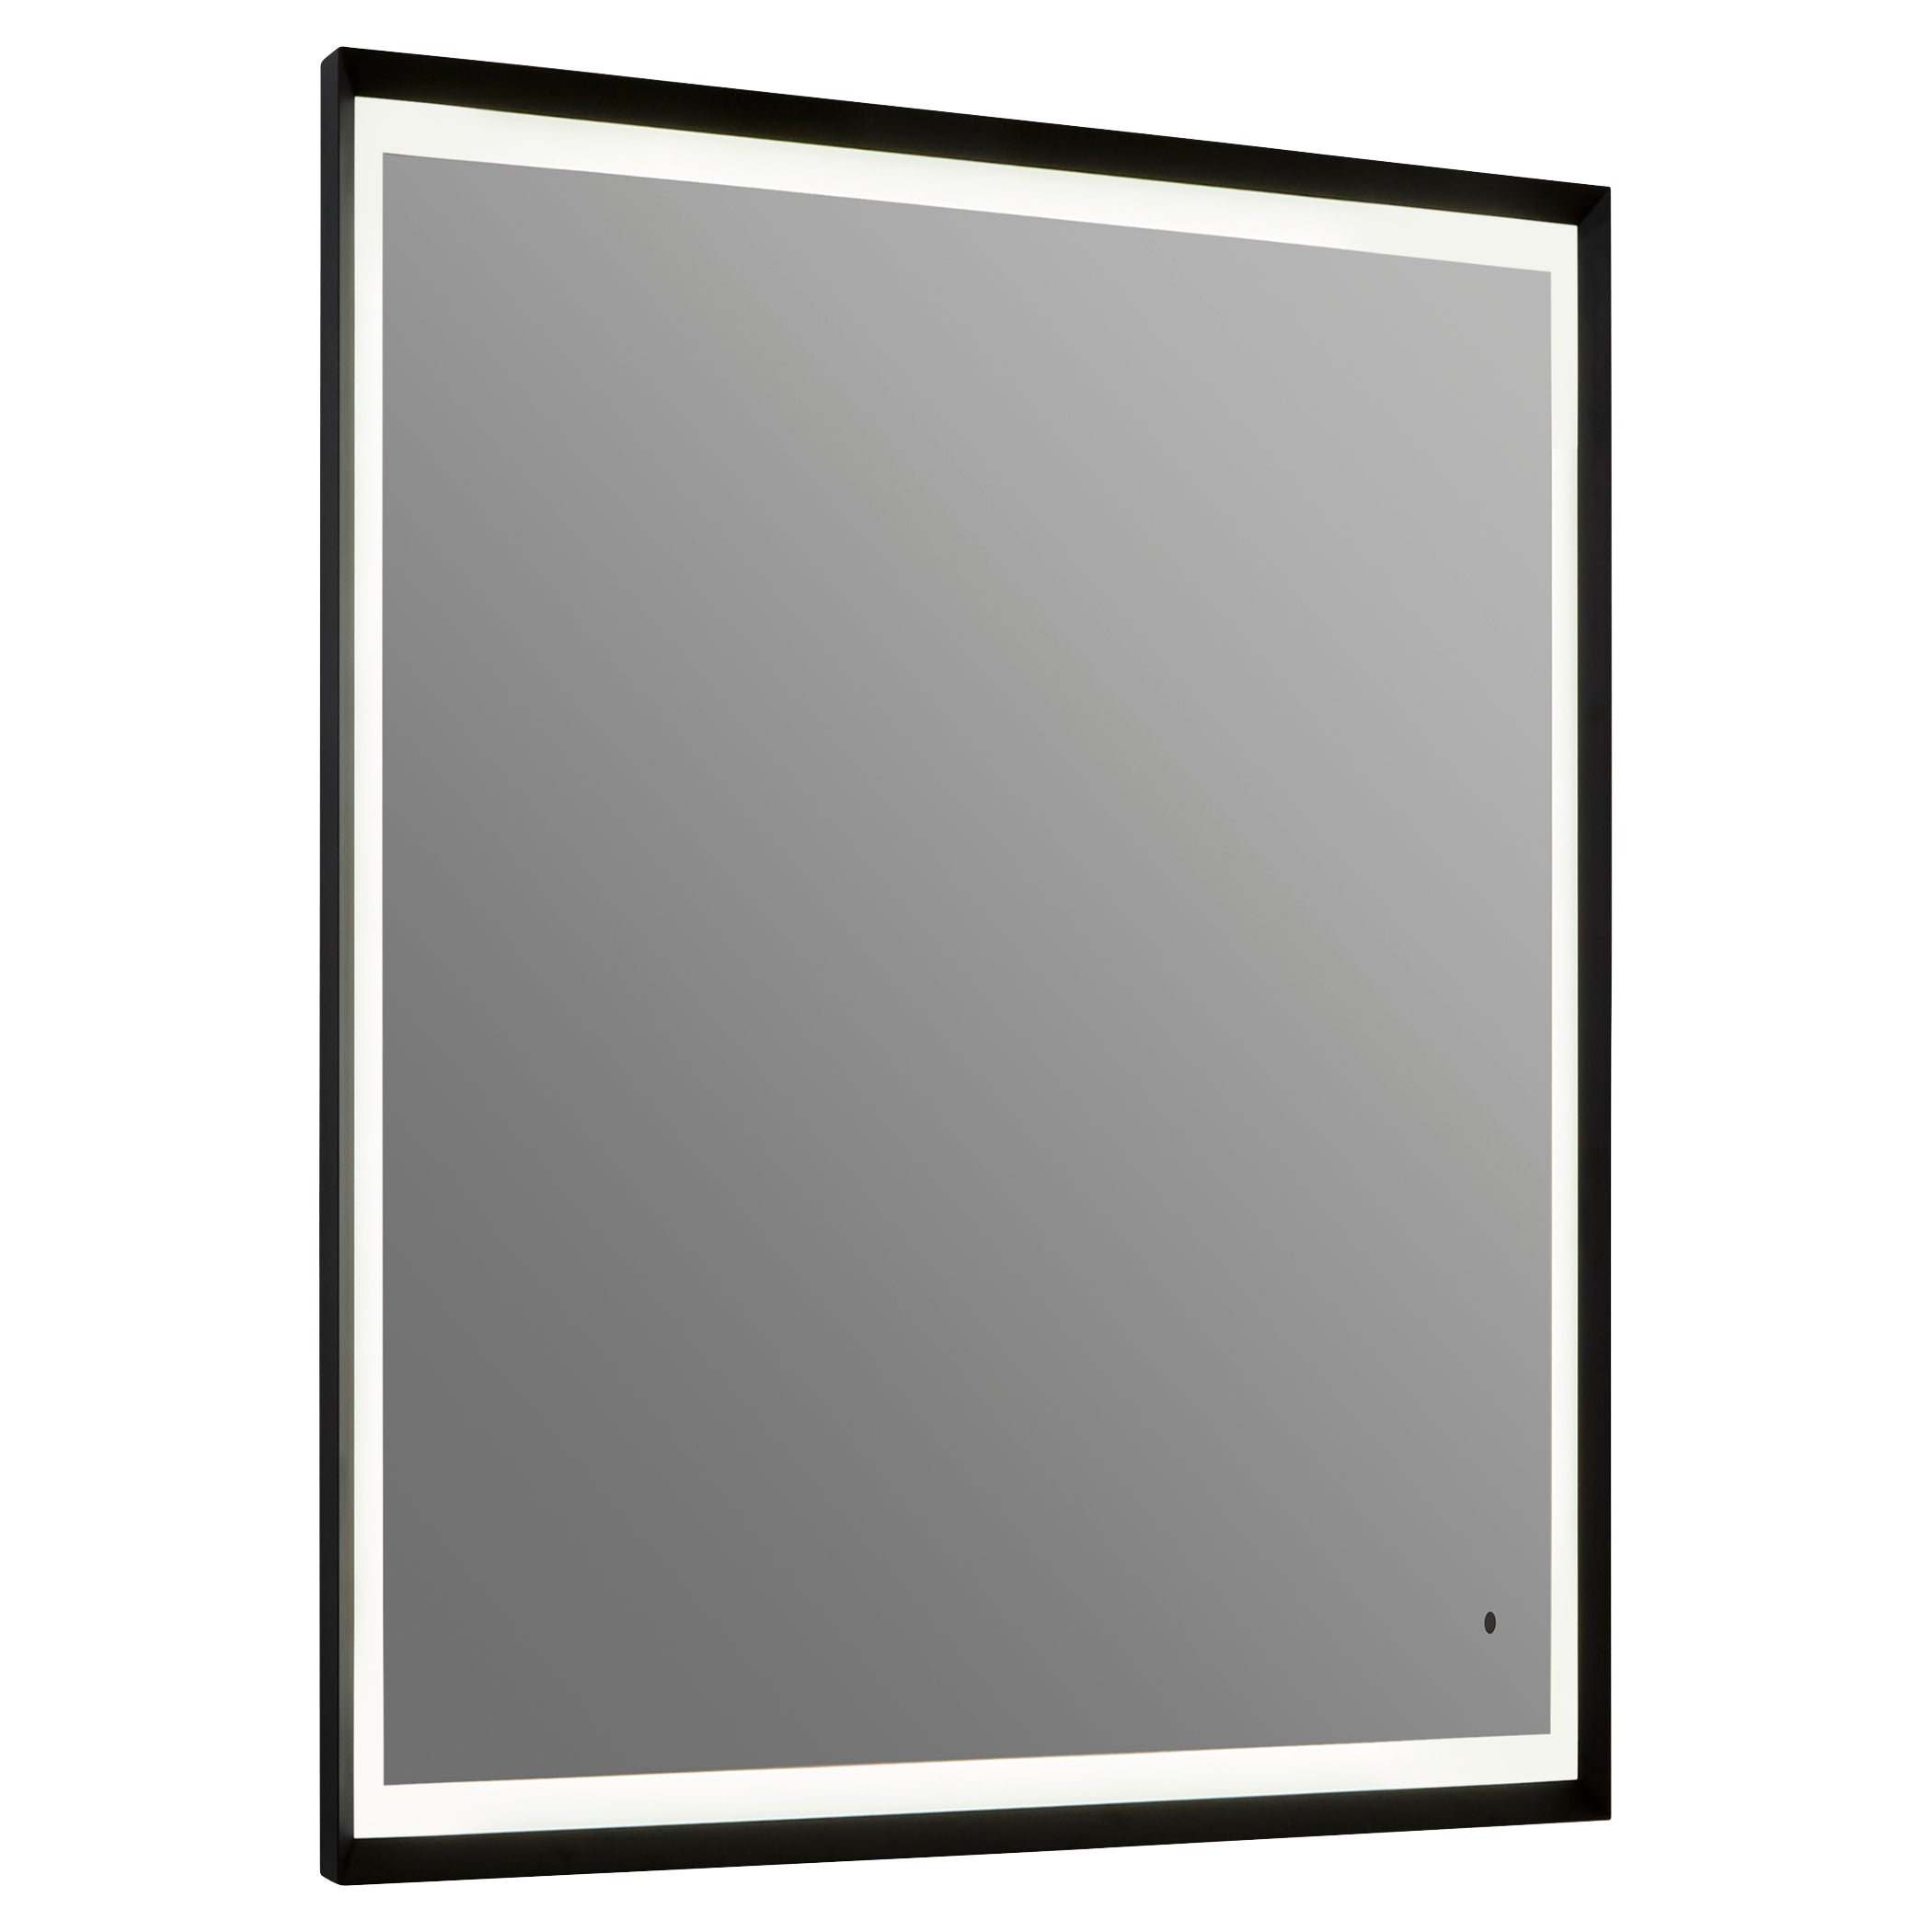 Oxygen Dusk 3-0801-15 Lighted LED Vanity Mirror 18x24 Inch - Black